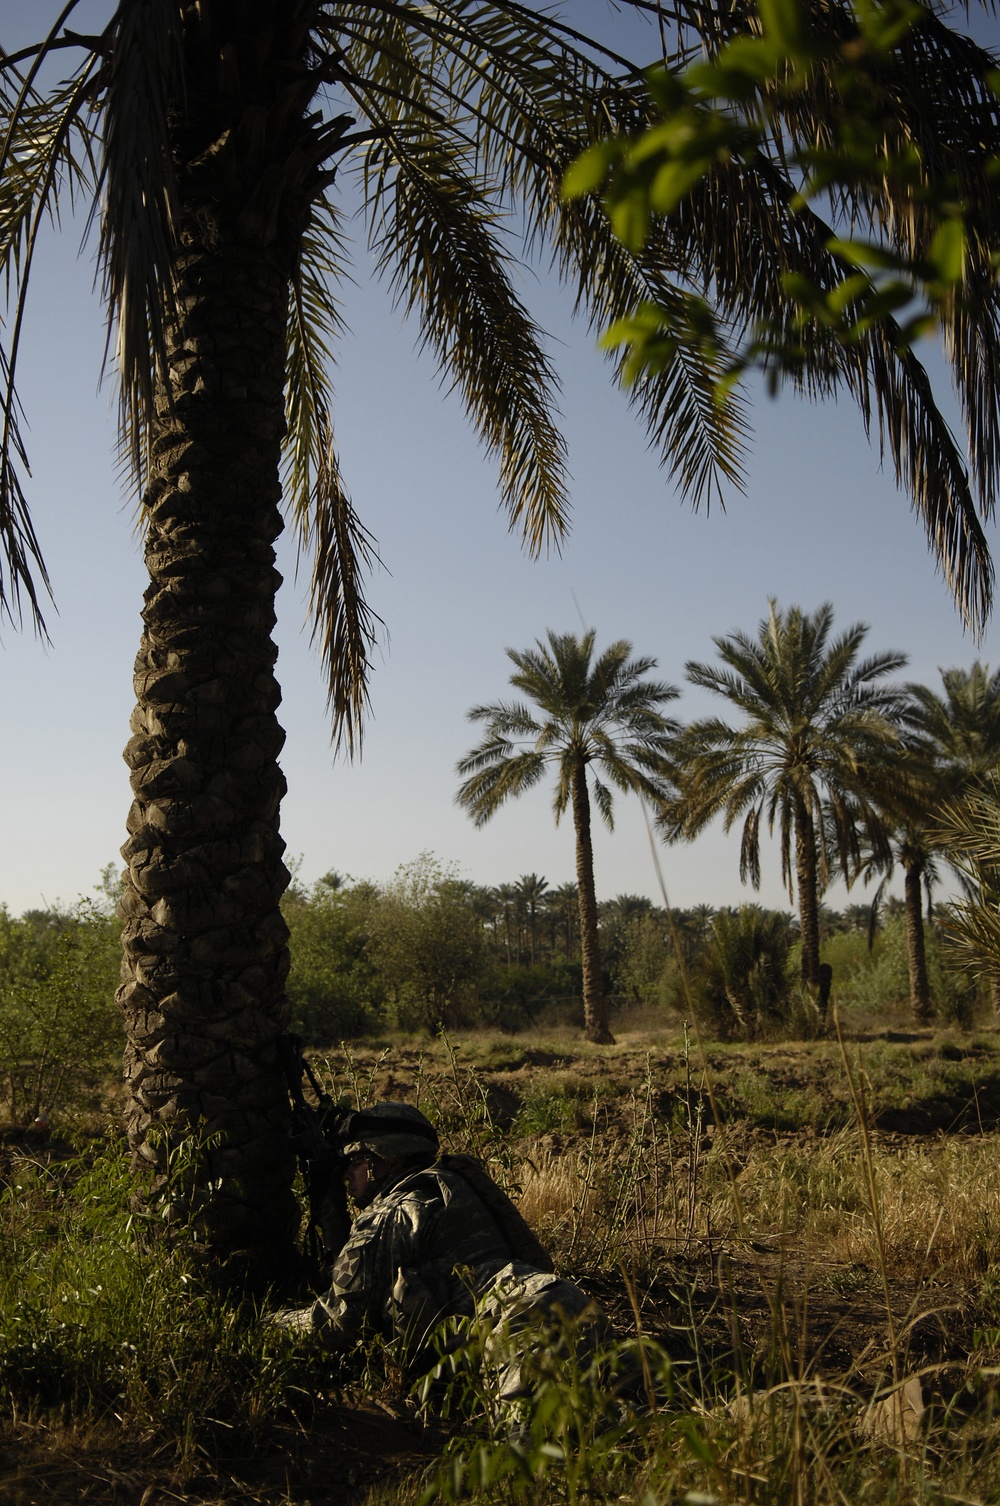 U.S. Soldiers, Iraqi police clear Palm Groves near Diyala River